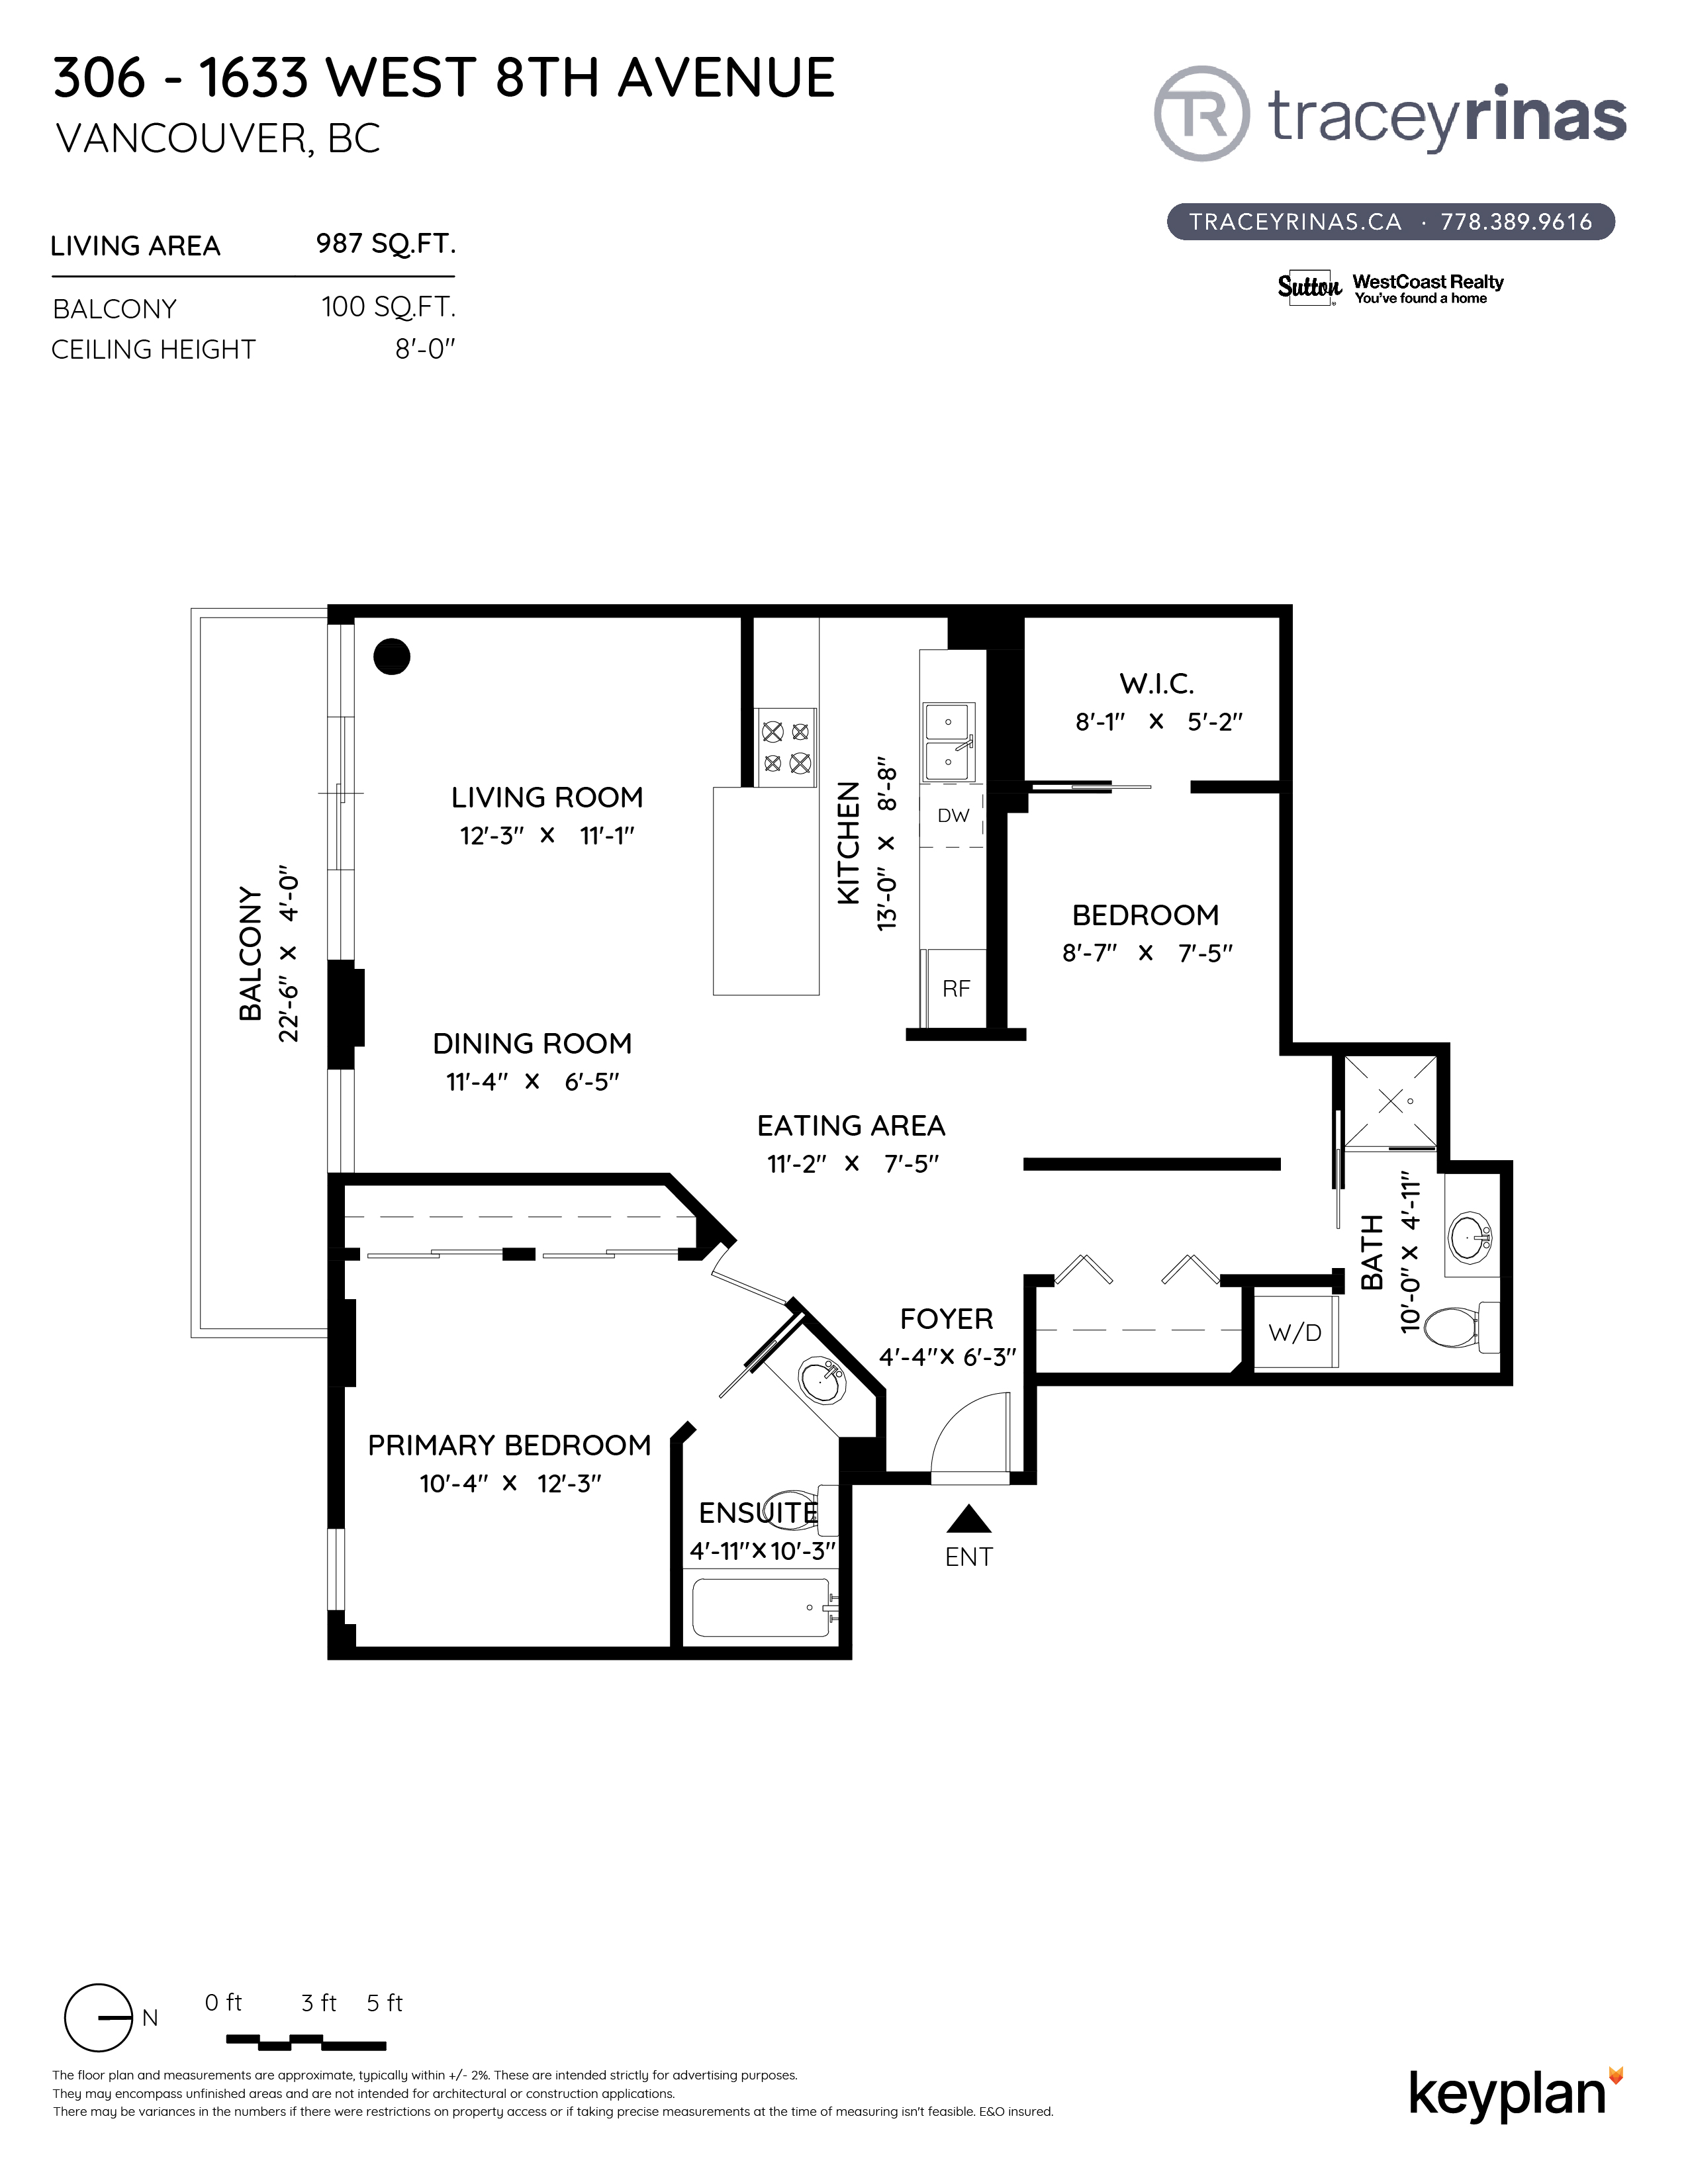 Tracey Rinas - Unit 306 - 1633 West 8th Avenue, Vancouver, BC, Canada | Floor Plan 1